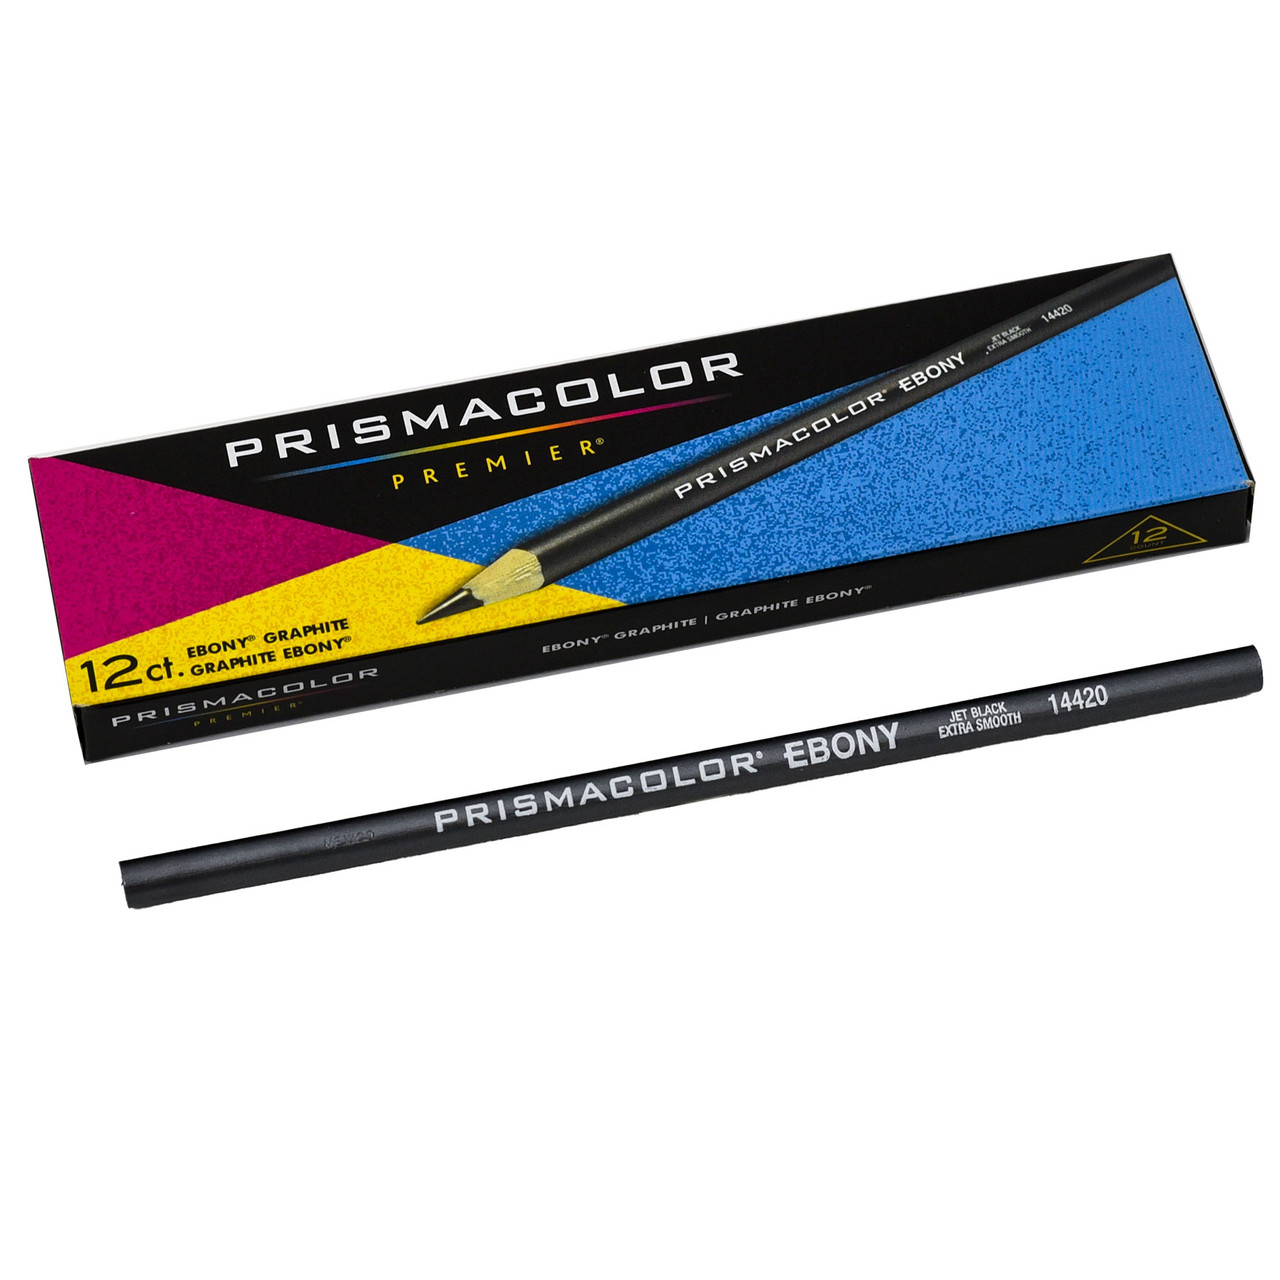 Prismacolor Ebony 14420 Drawing Pencils, Jet Black, Box of 12